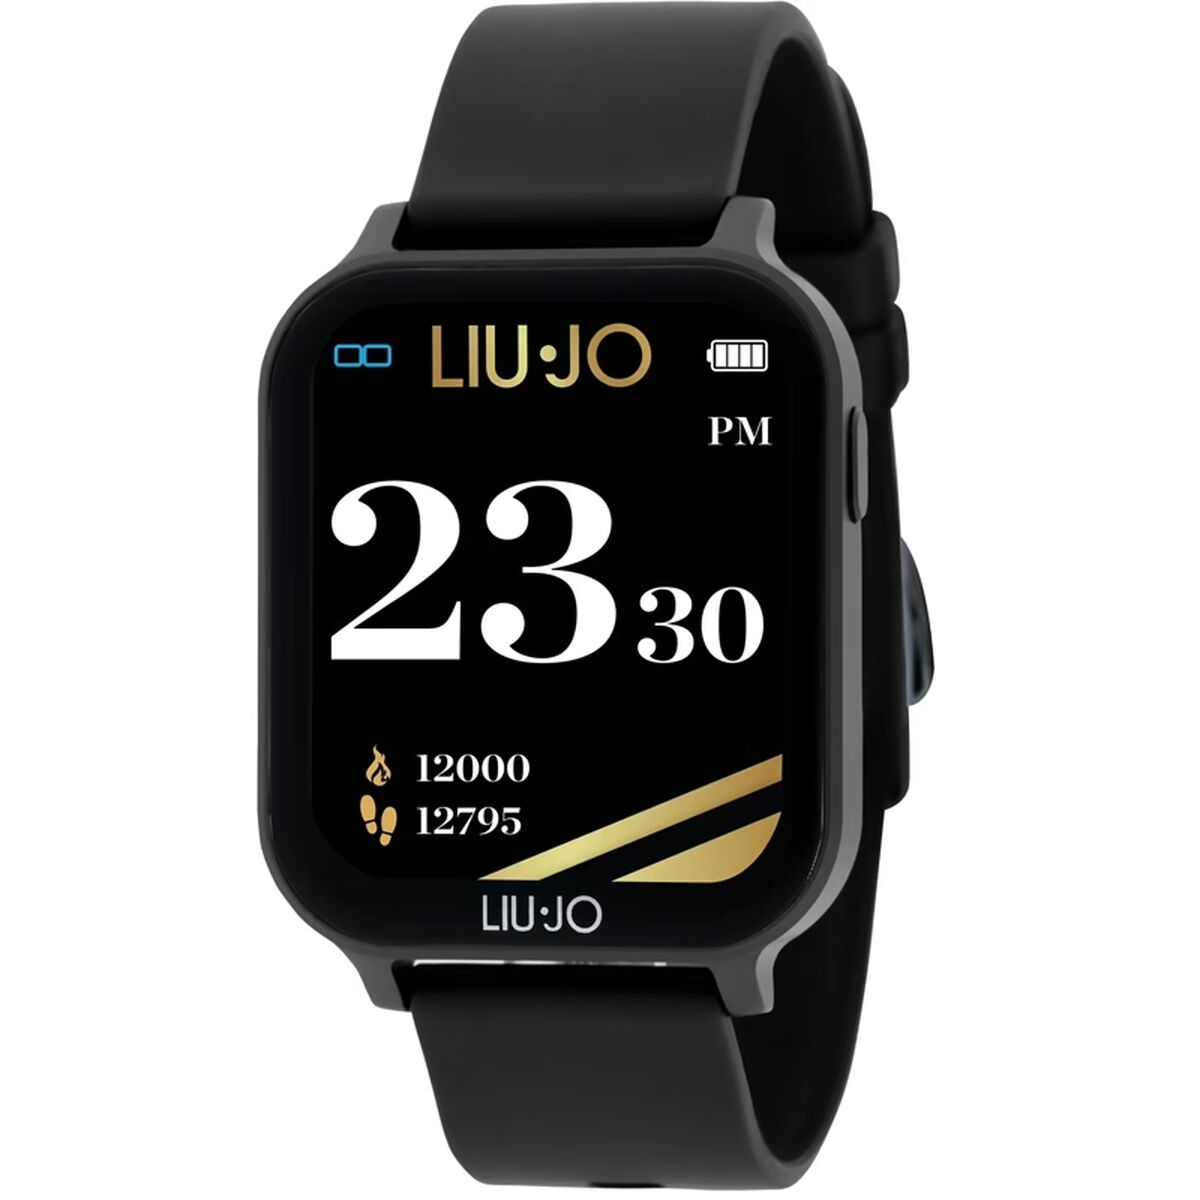 Kaufe Smartwatch LIU JO SWLJ115 bei AWK Flagship um € 145.00